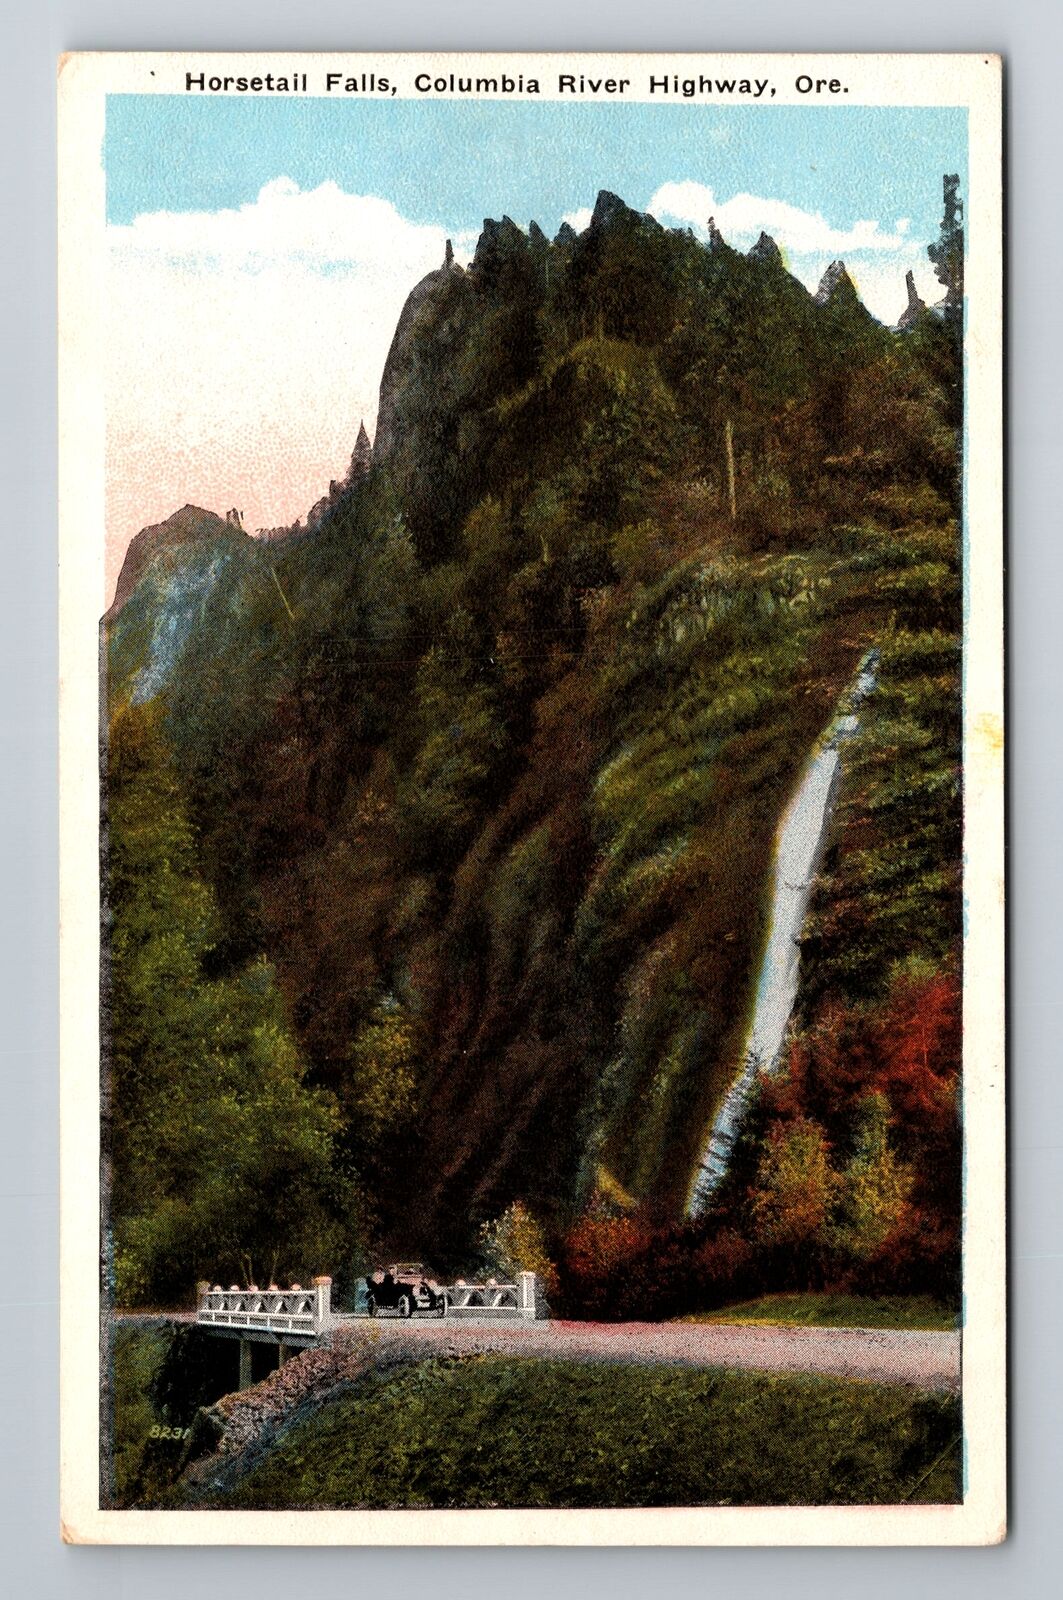 OR-Oregon, Horsetail Falls, Columbia River Highway, Antique, Vintage Postcard